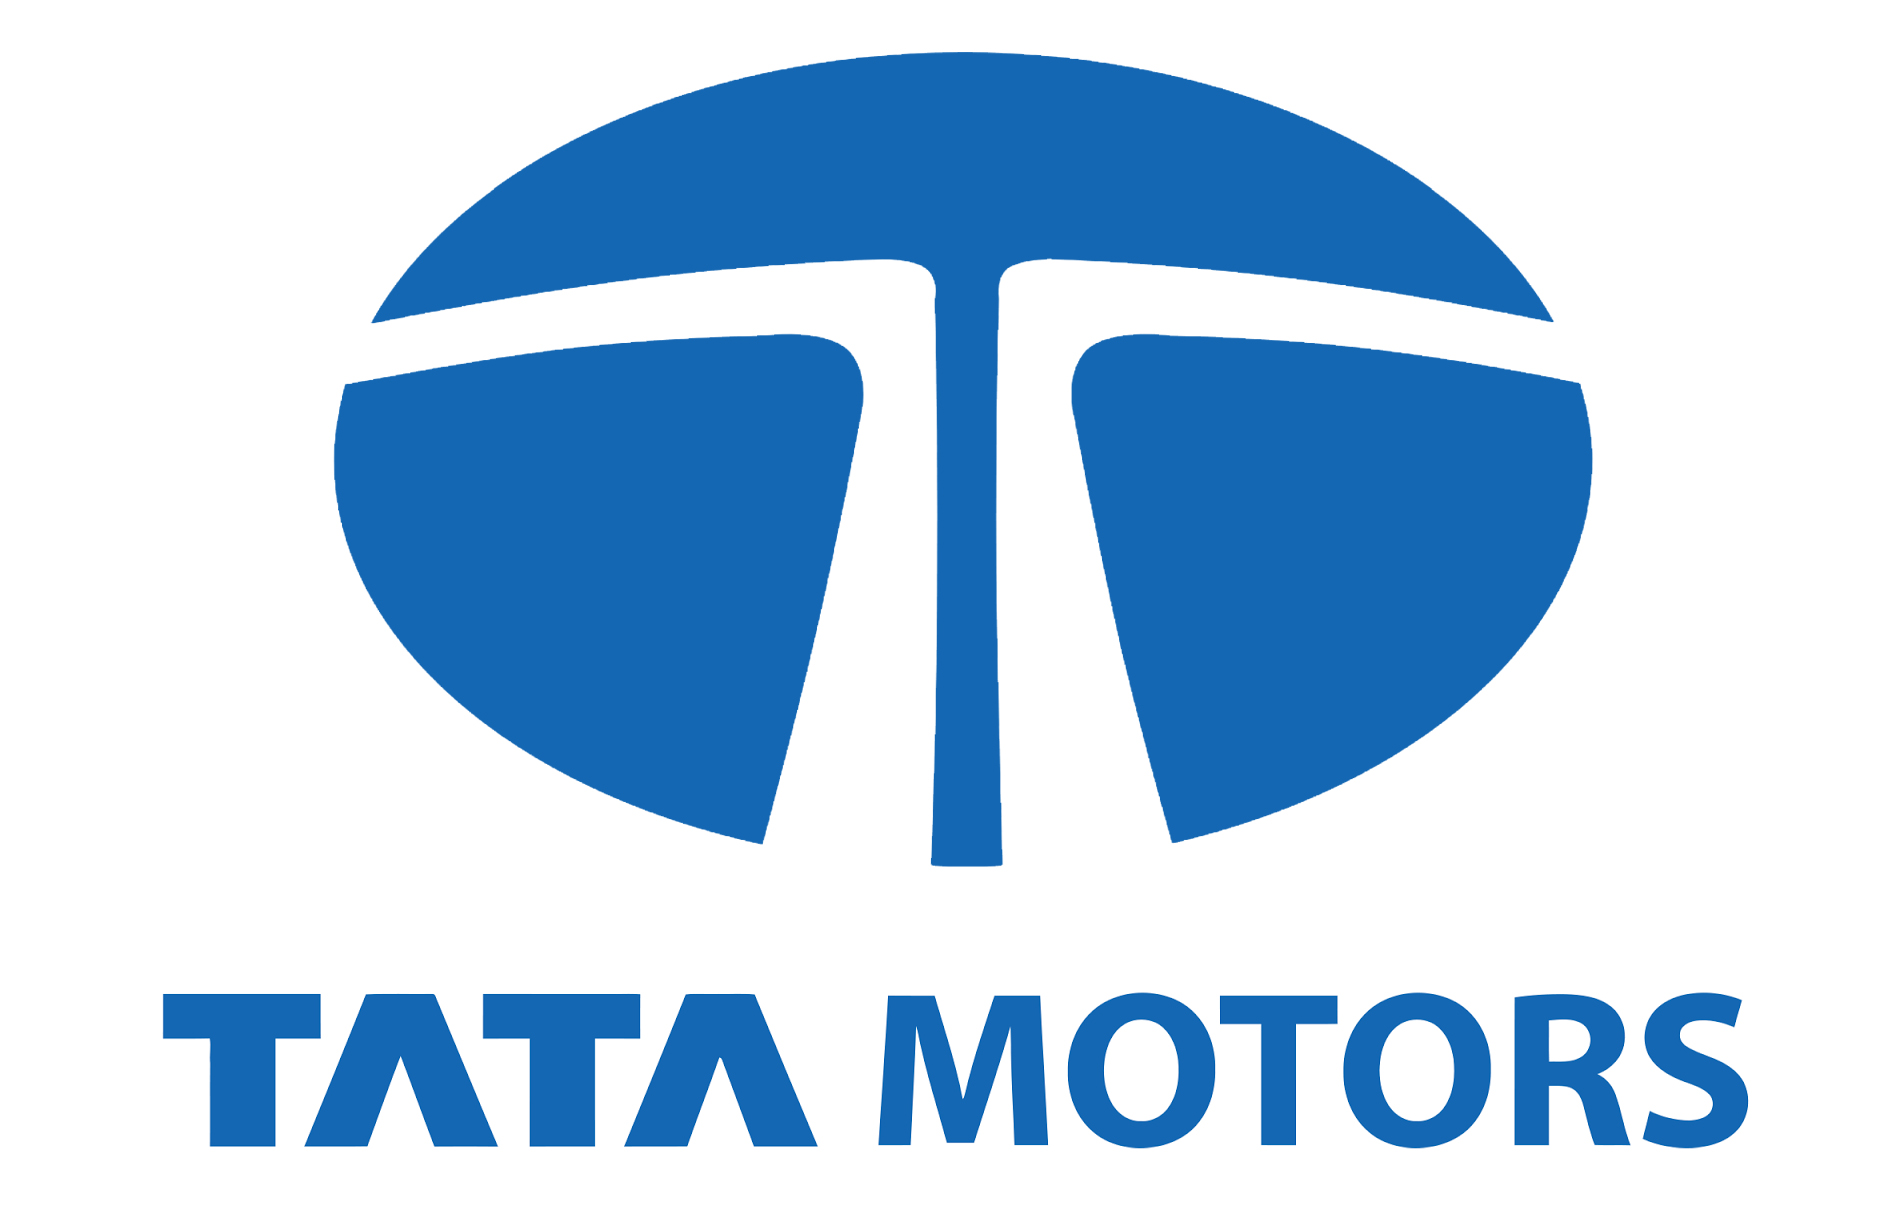 Tata Motors Cars Showroom - Truenorth Automobiles|Show Room|Automotive